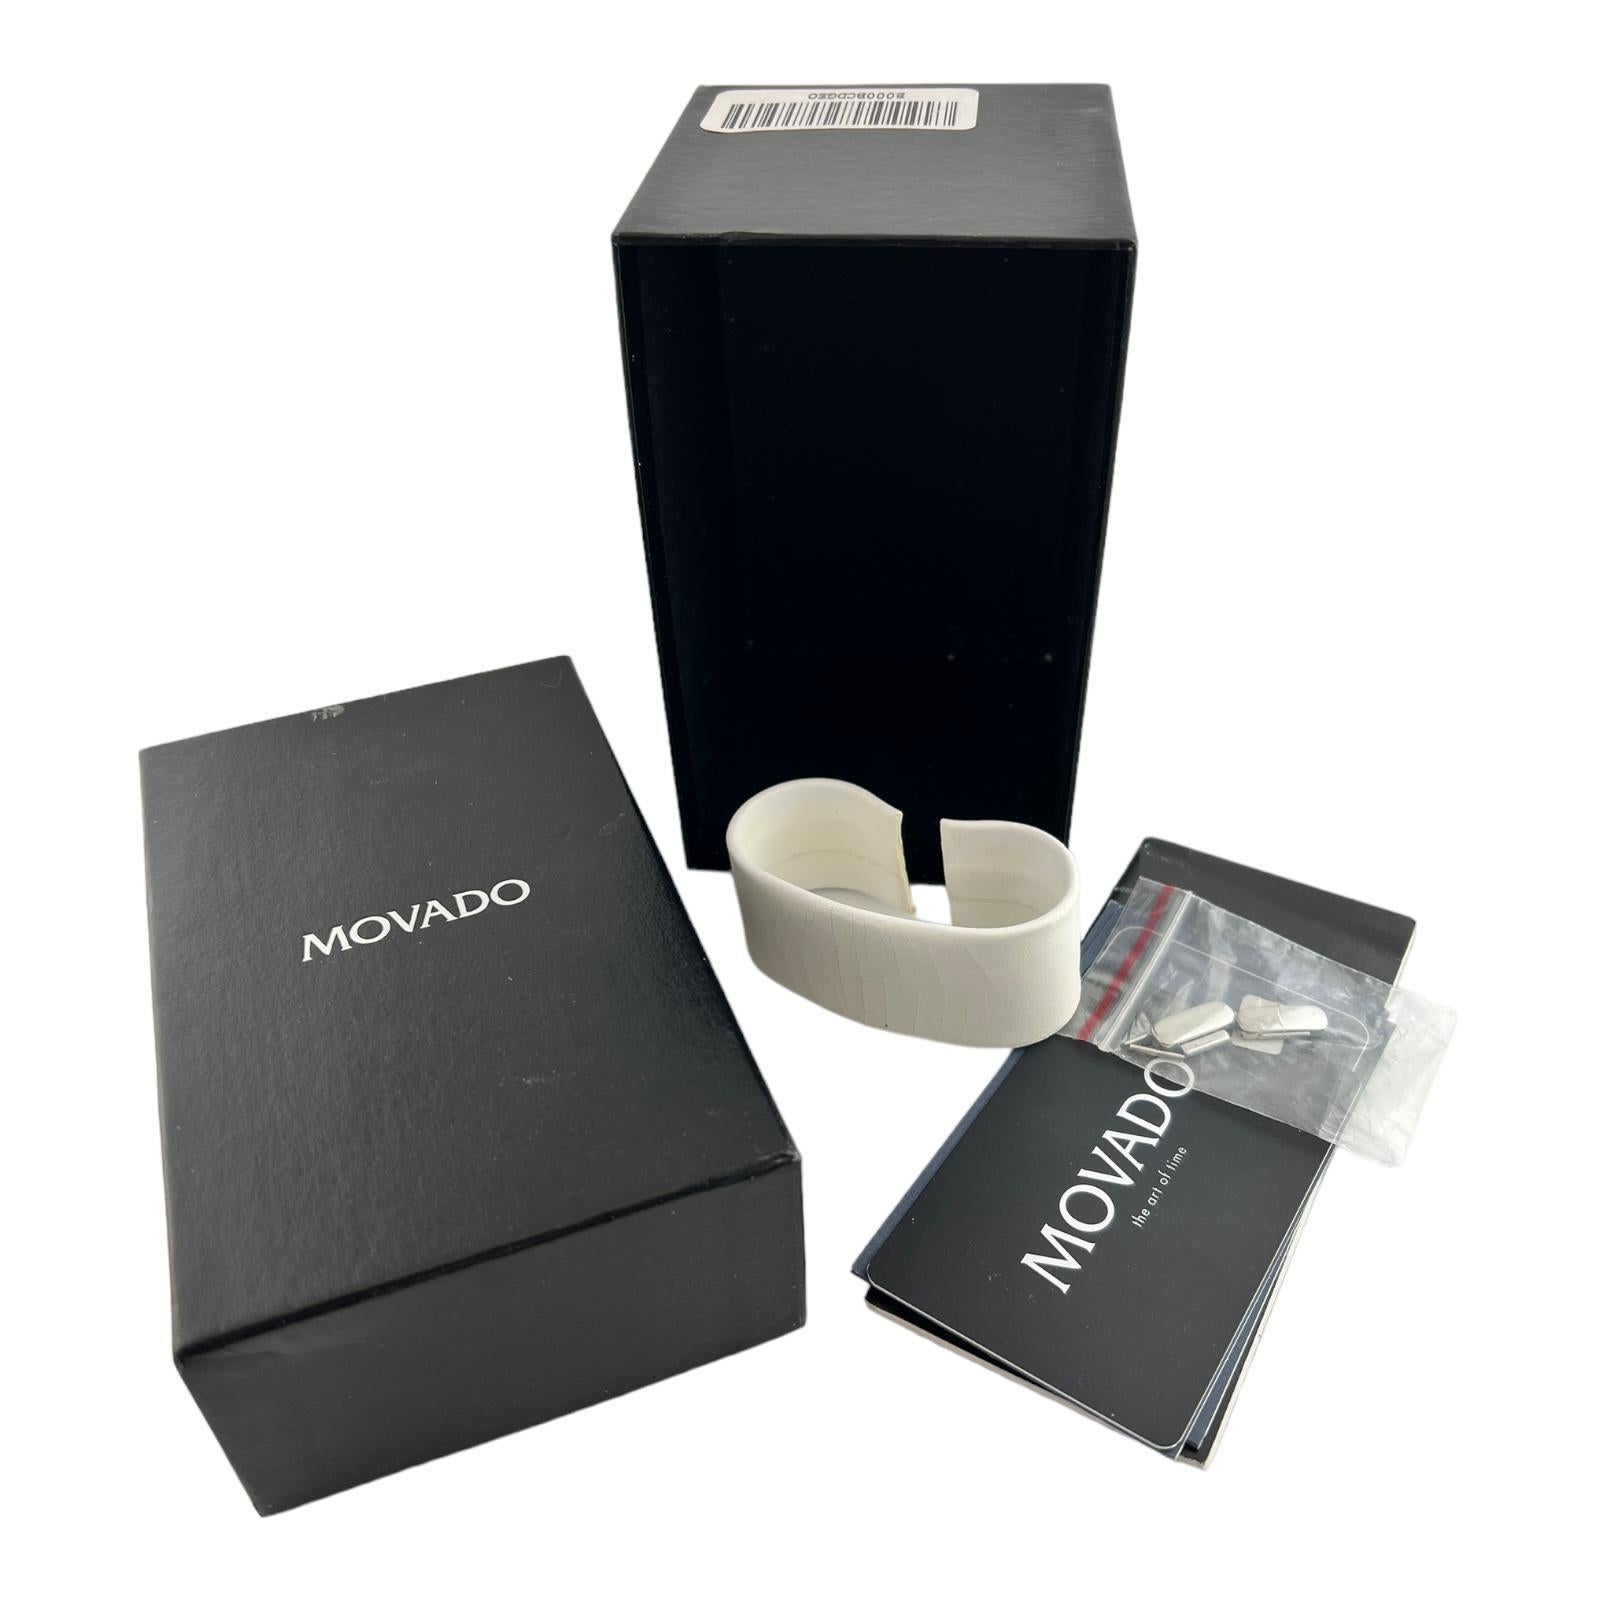 Movado Dolce Ladies Bracelet Watch 84 G2 1330 box #15796 For Sale 3